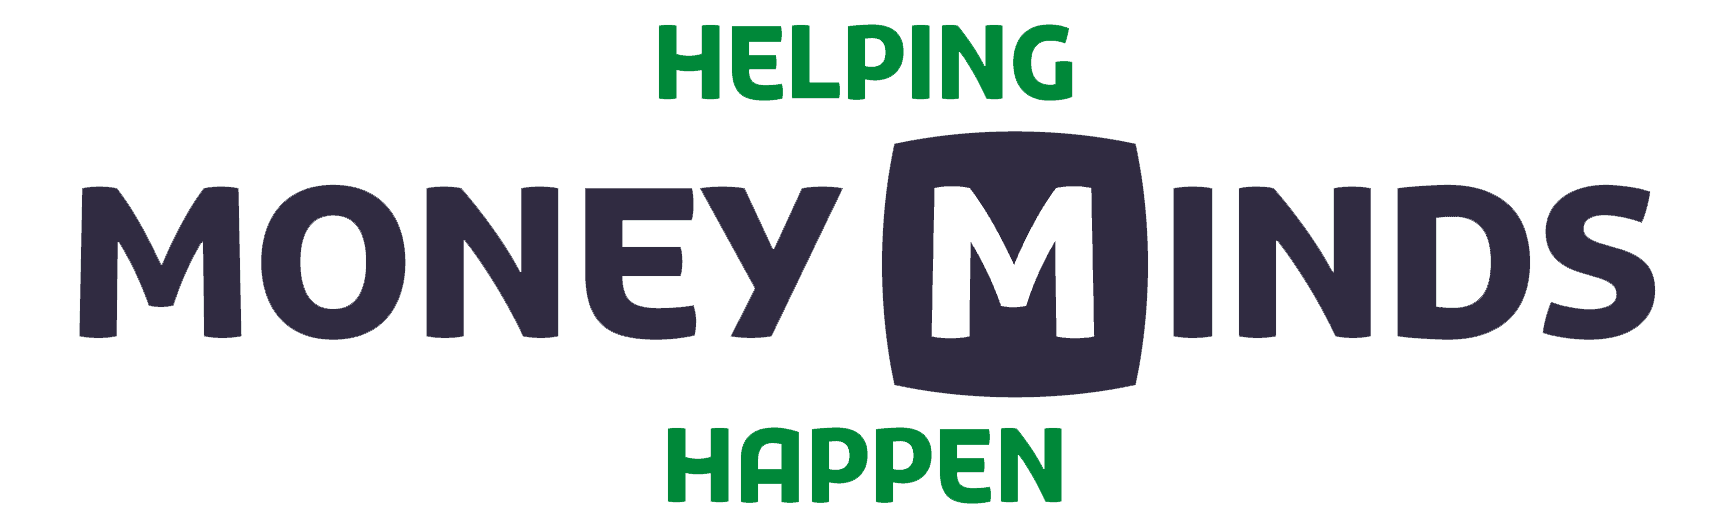 Helping Money Minds happen logo